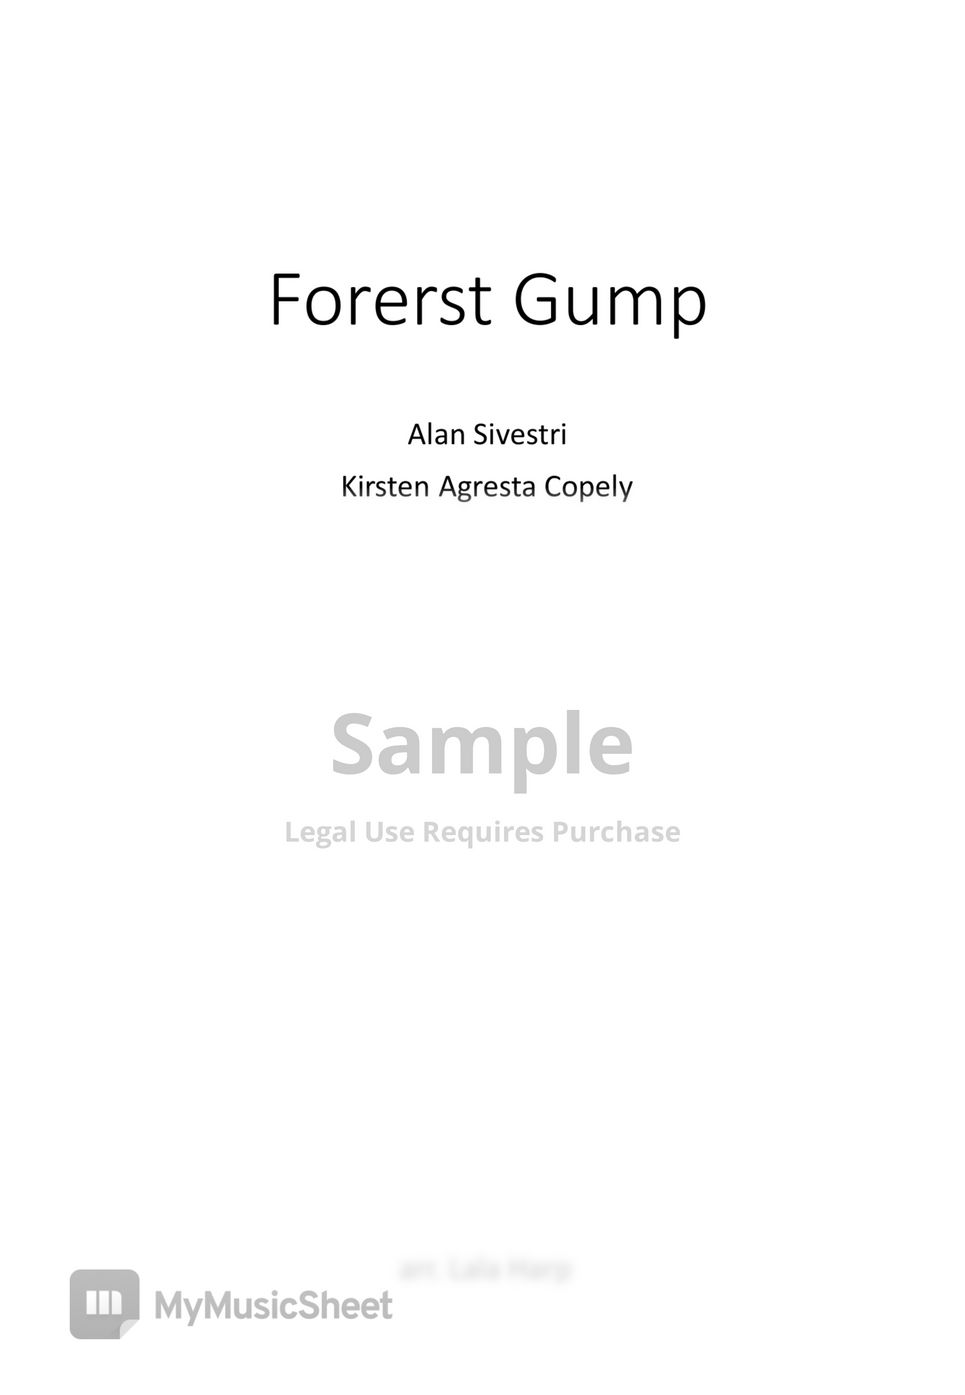 Alan Silvestri - Forrest Gump (미니하프악보) by 라라하프